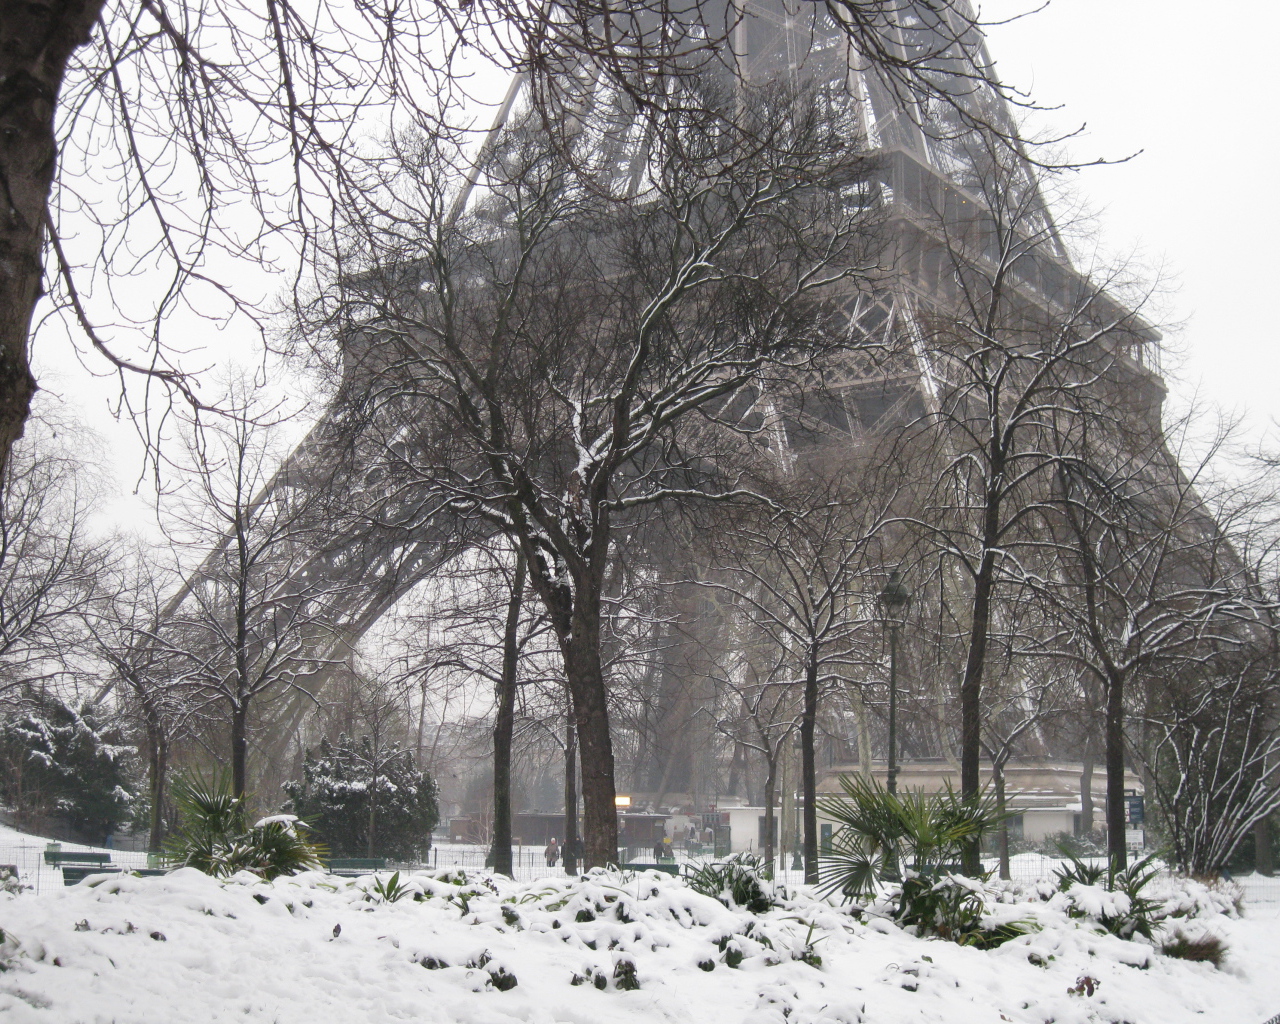 Snow in Paris trees around the Eiffel Tower